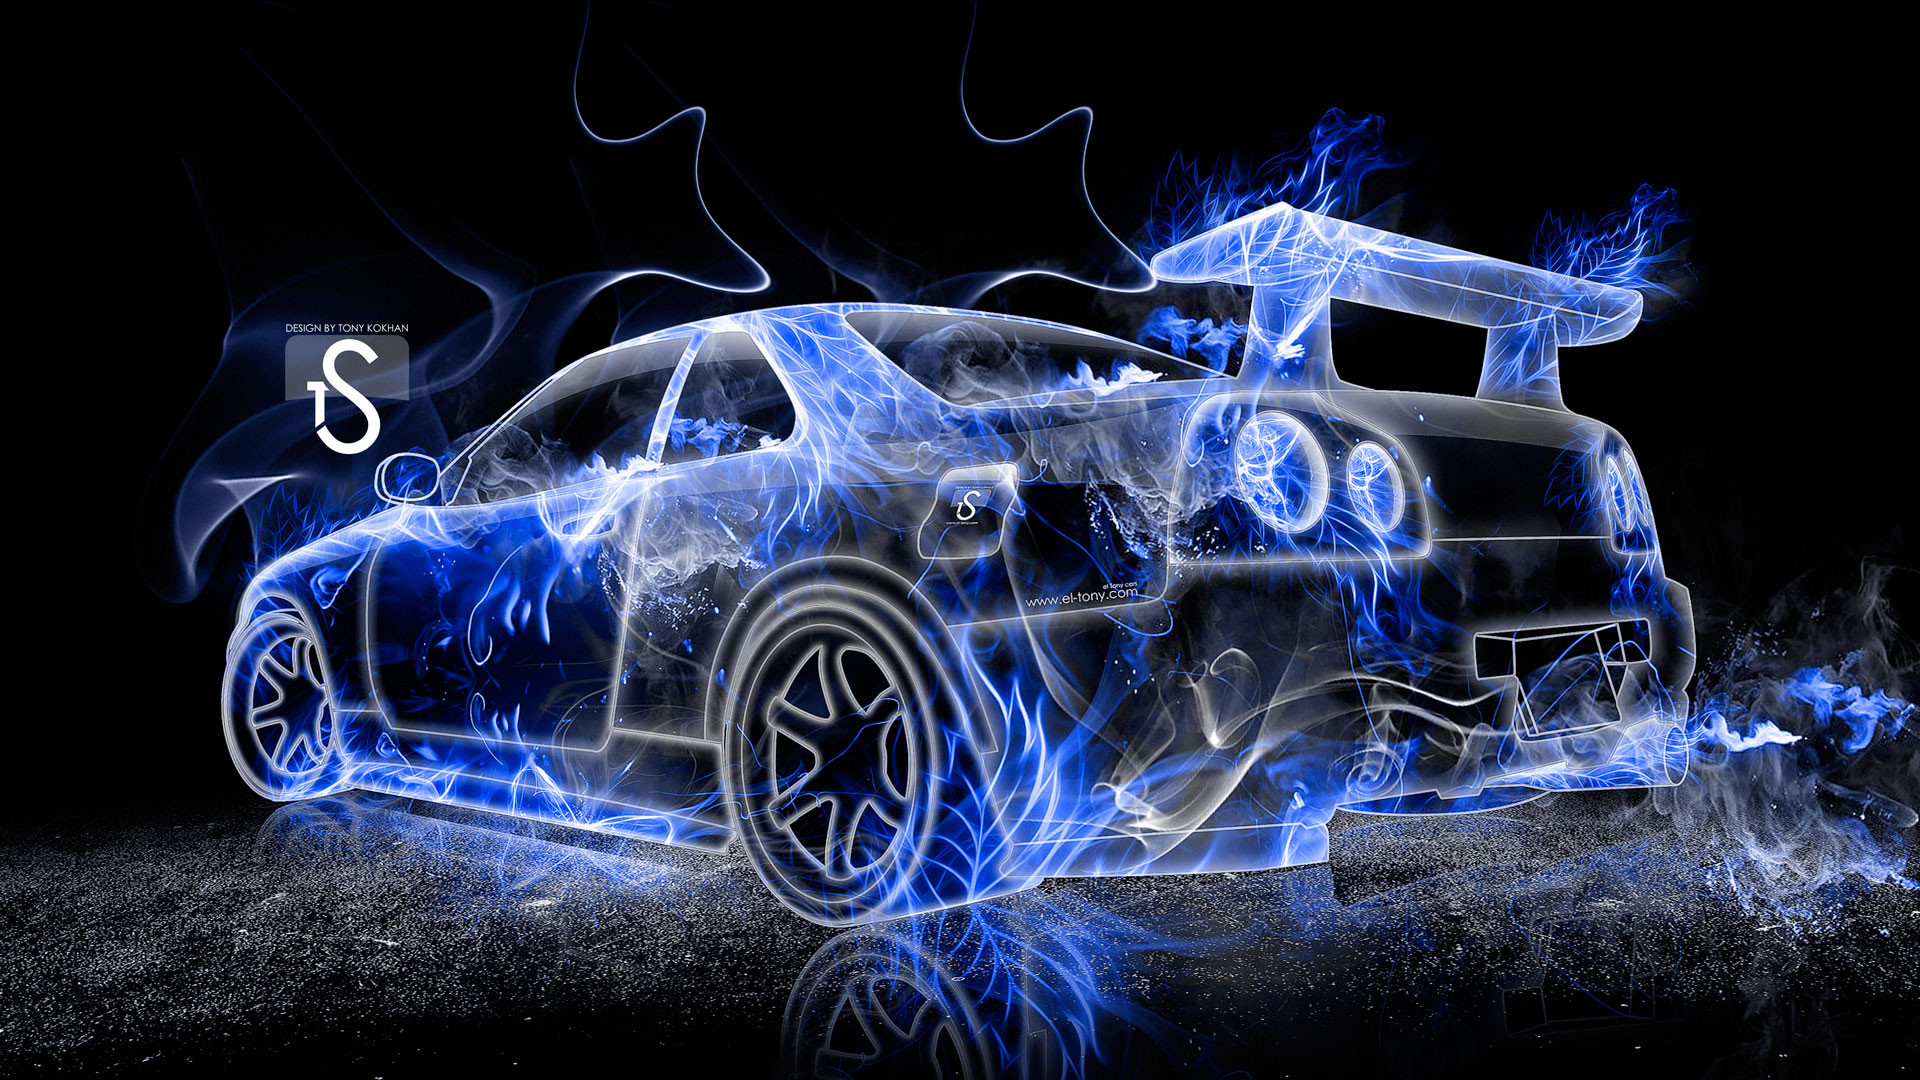 hd pics photos cars blue fire abstract desktop background wallpaper